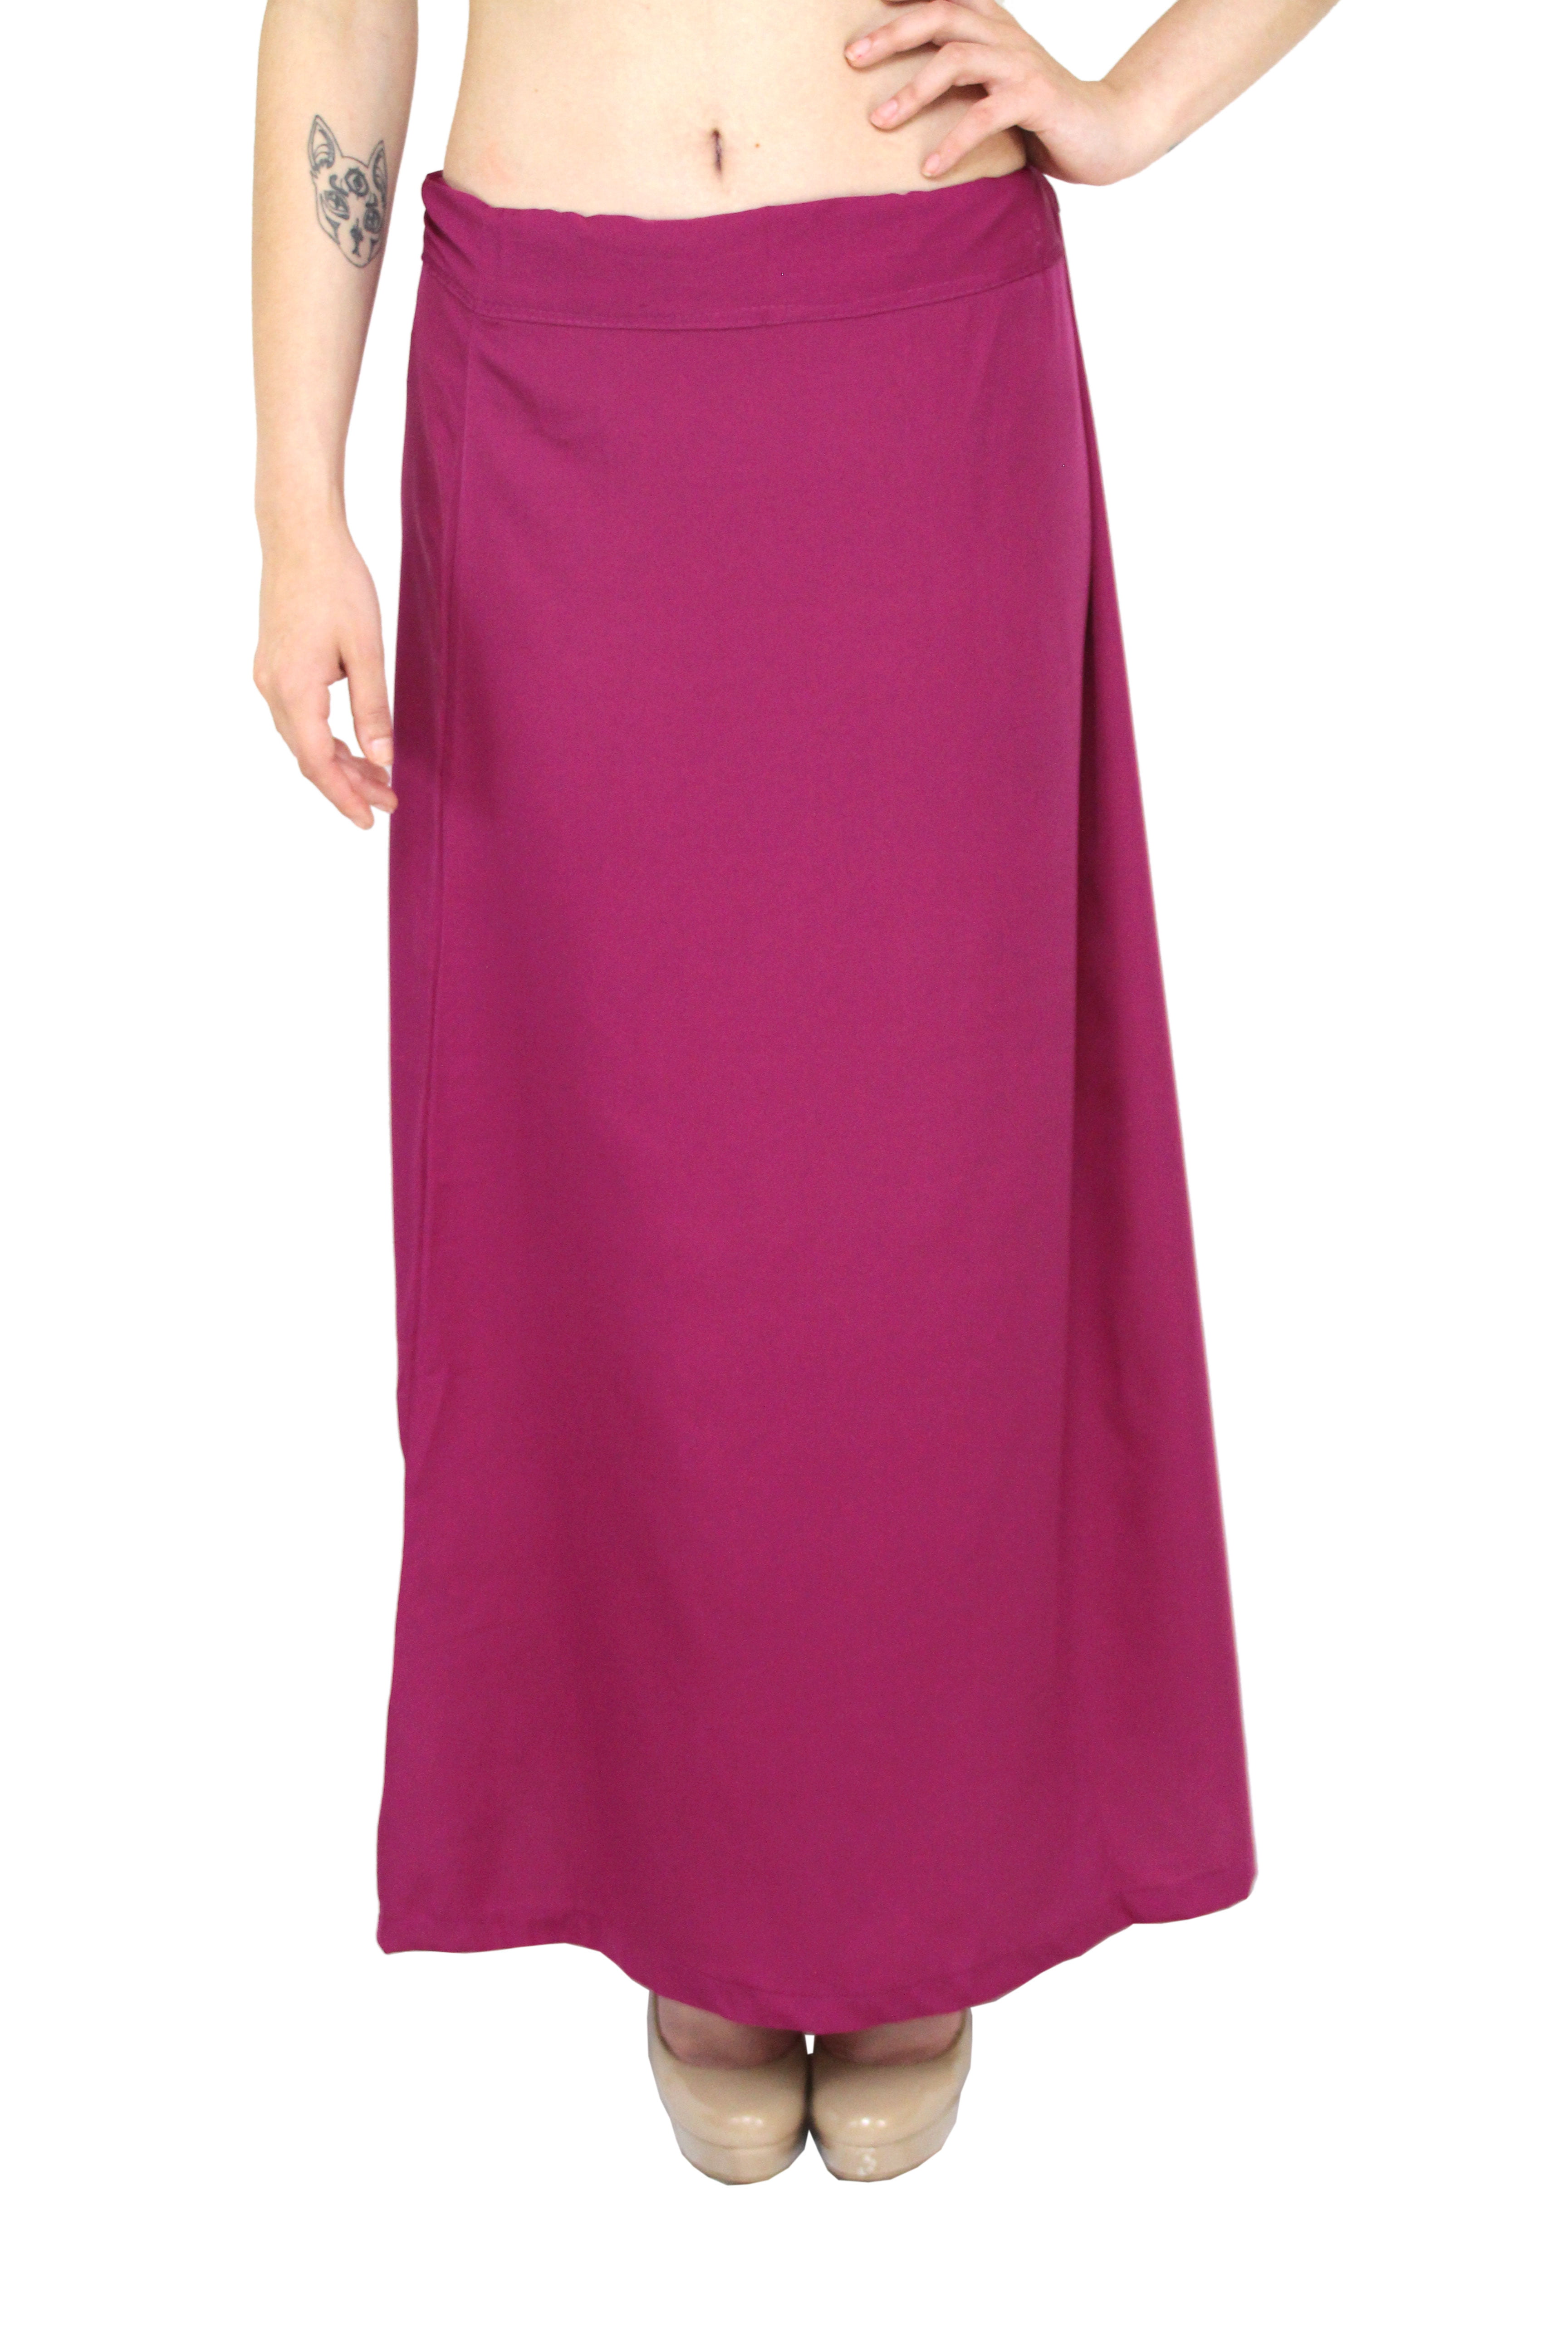 Craftstribe Saree Petticoat Women Wear Adjustable Drawstring Waist Bab